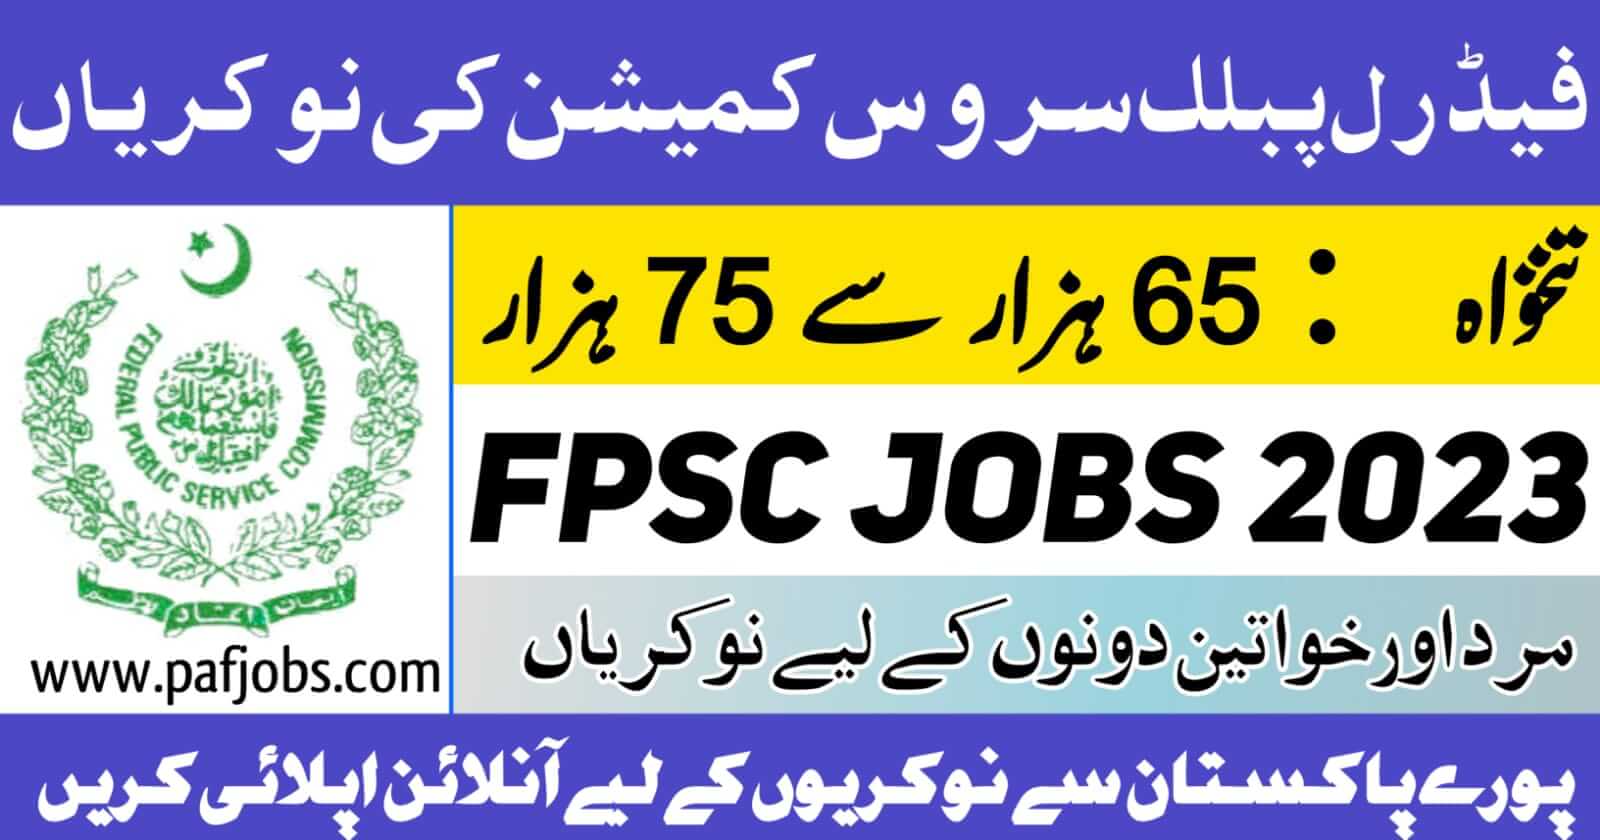 FPSC Jobs 2023 Apply Online - pafjobs.com